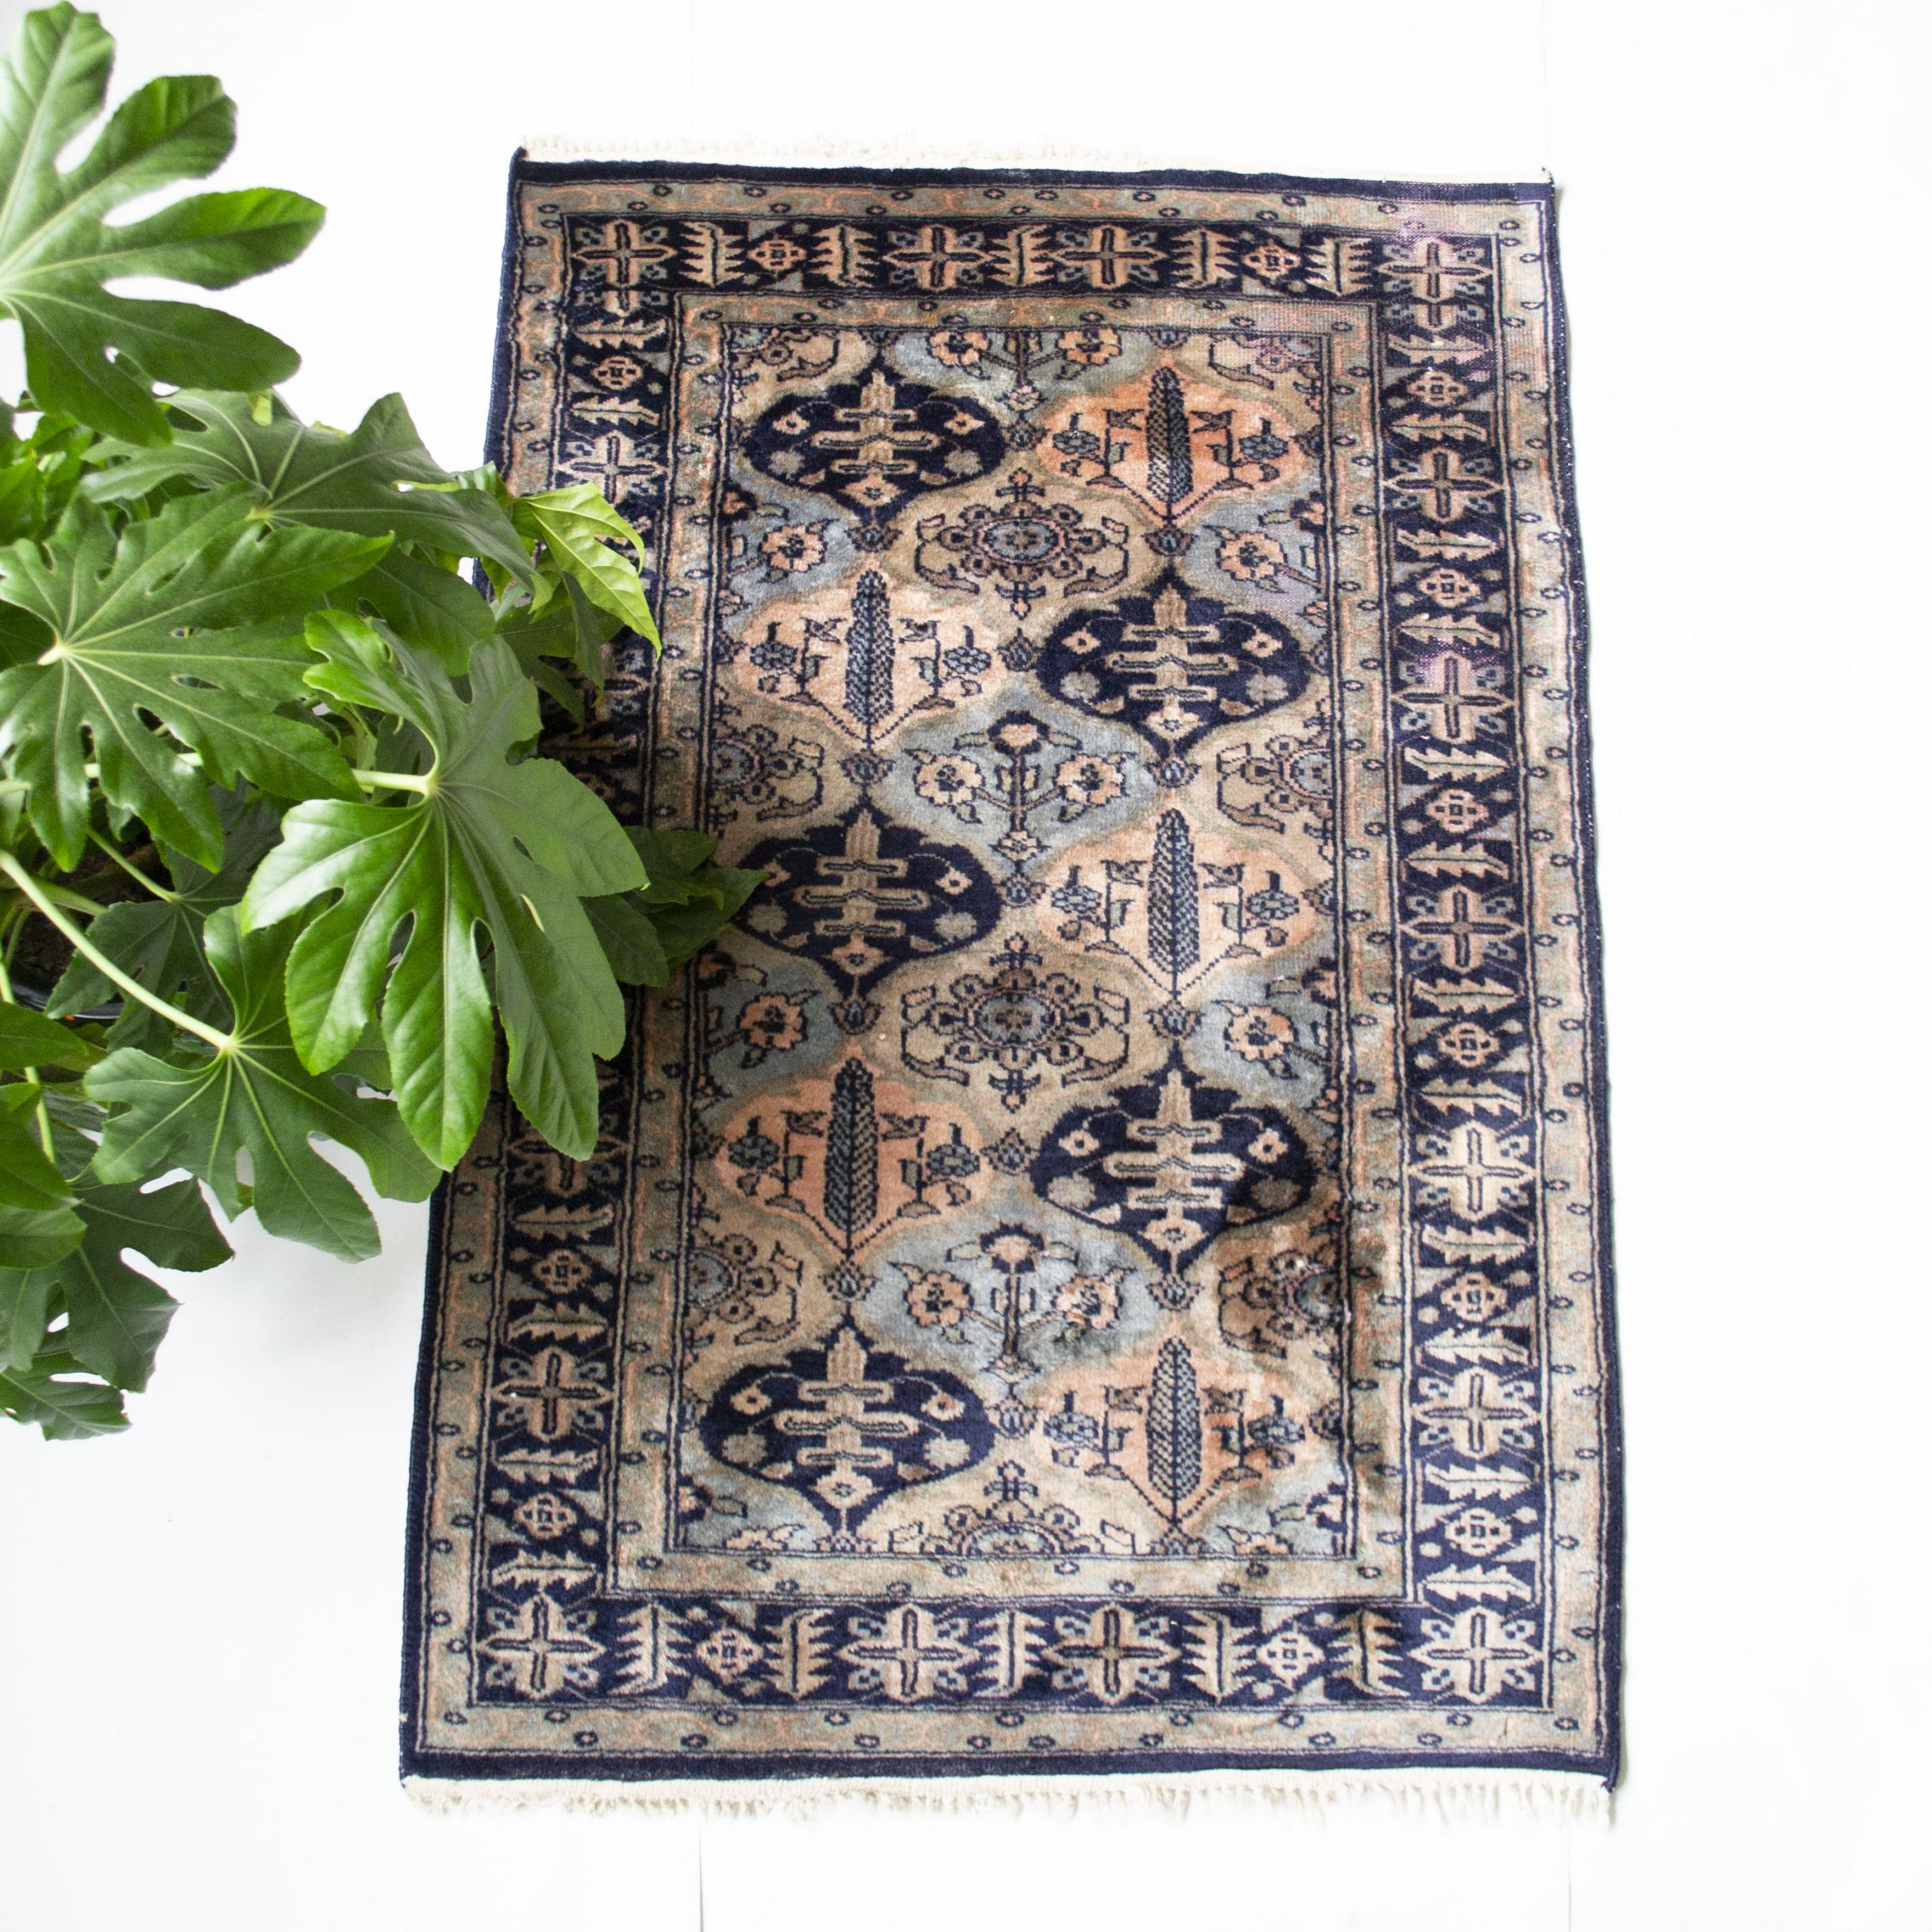 US dollar Kleverig Sluier Vintage Perzisch tapijt/vloerkleed pastel - End of April